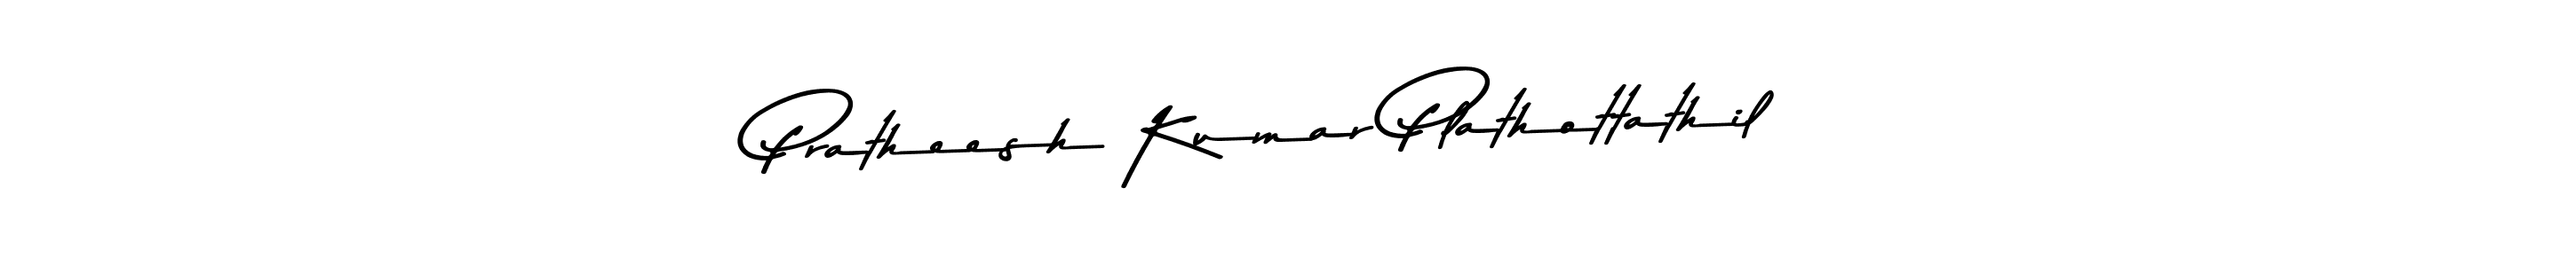 Check out images of Autograph of Pratheesh Kumar Plathottathil name. Actor Pratheesh Kumar Plathottathil Signature Style. Asem Kandis PERSONAL USE is a professional sign style online. Pratheesh Kumar Plathottathil signature style 9 images and pictures png